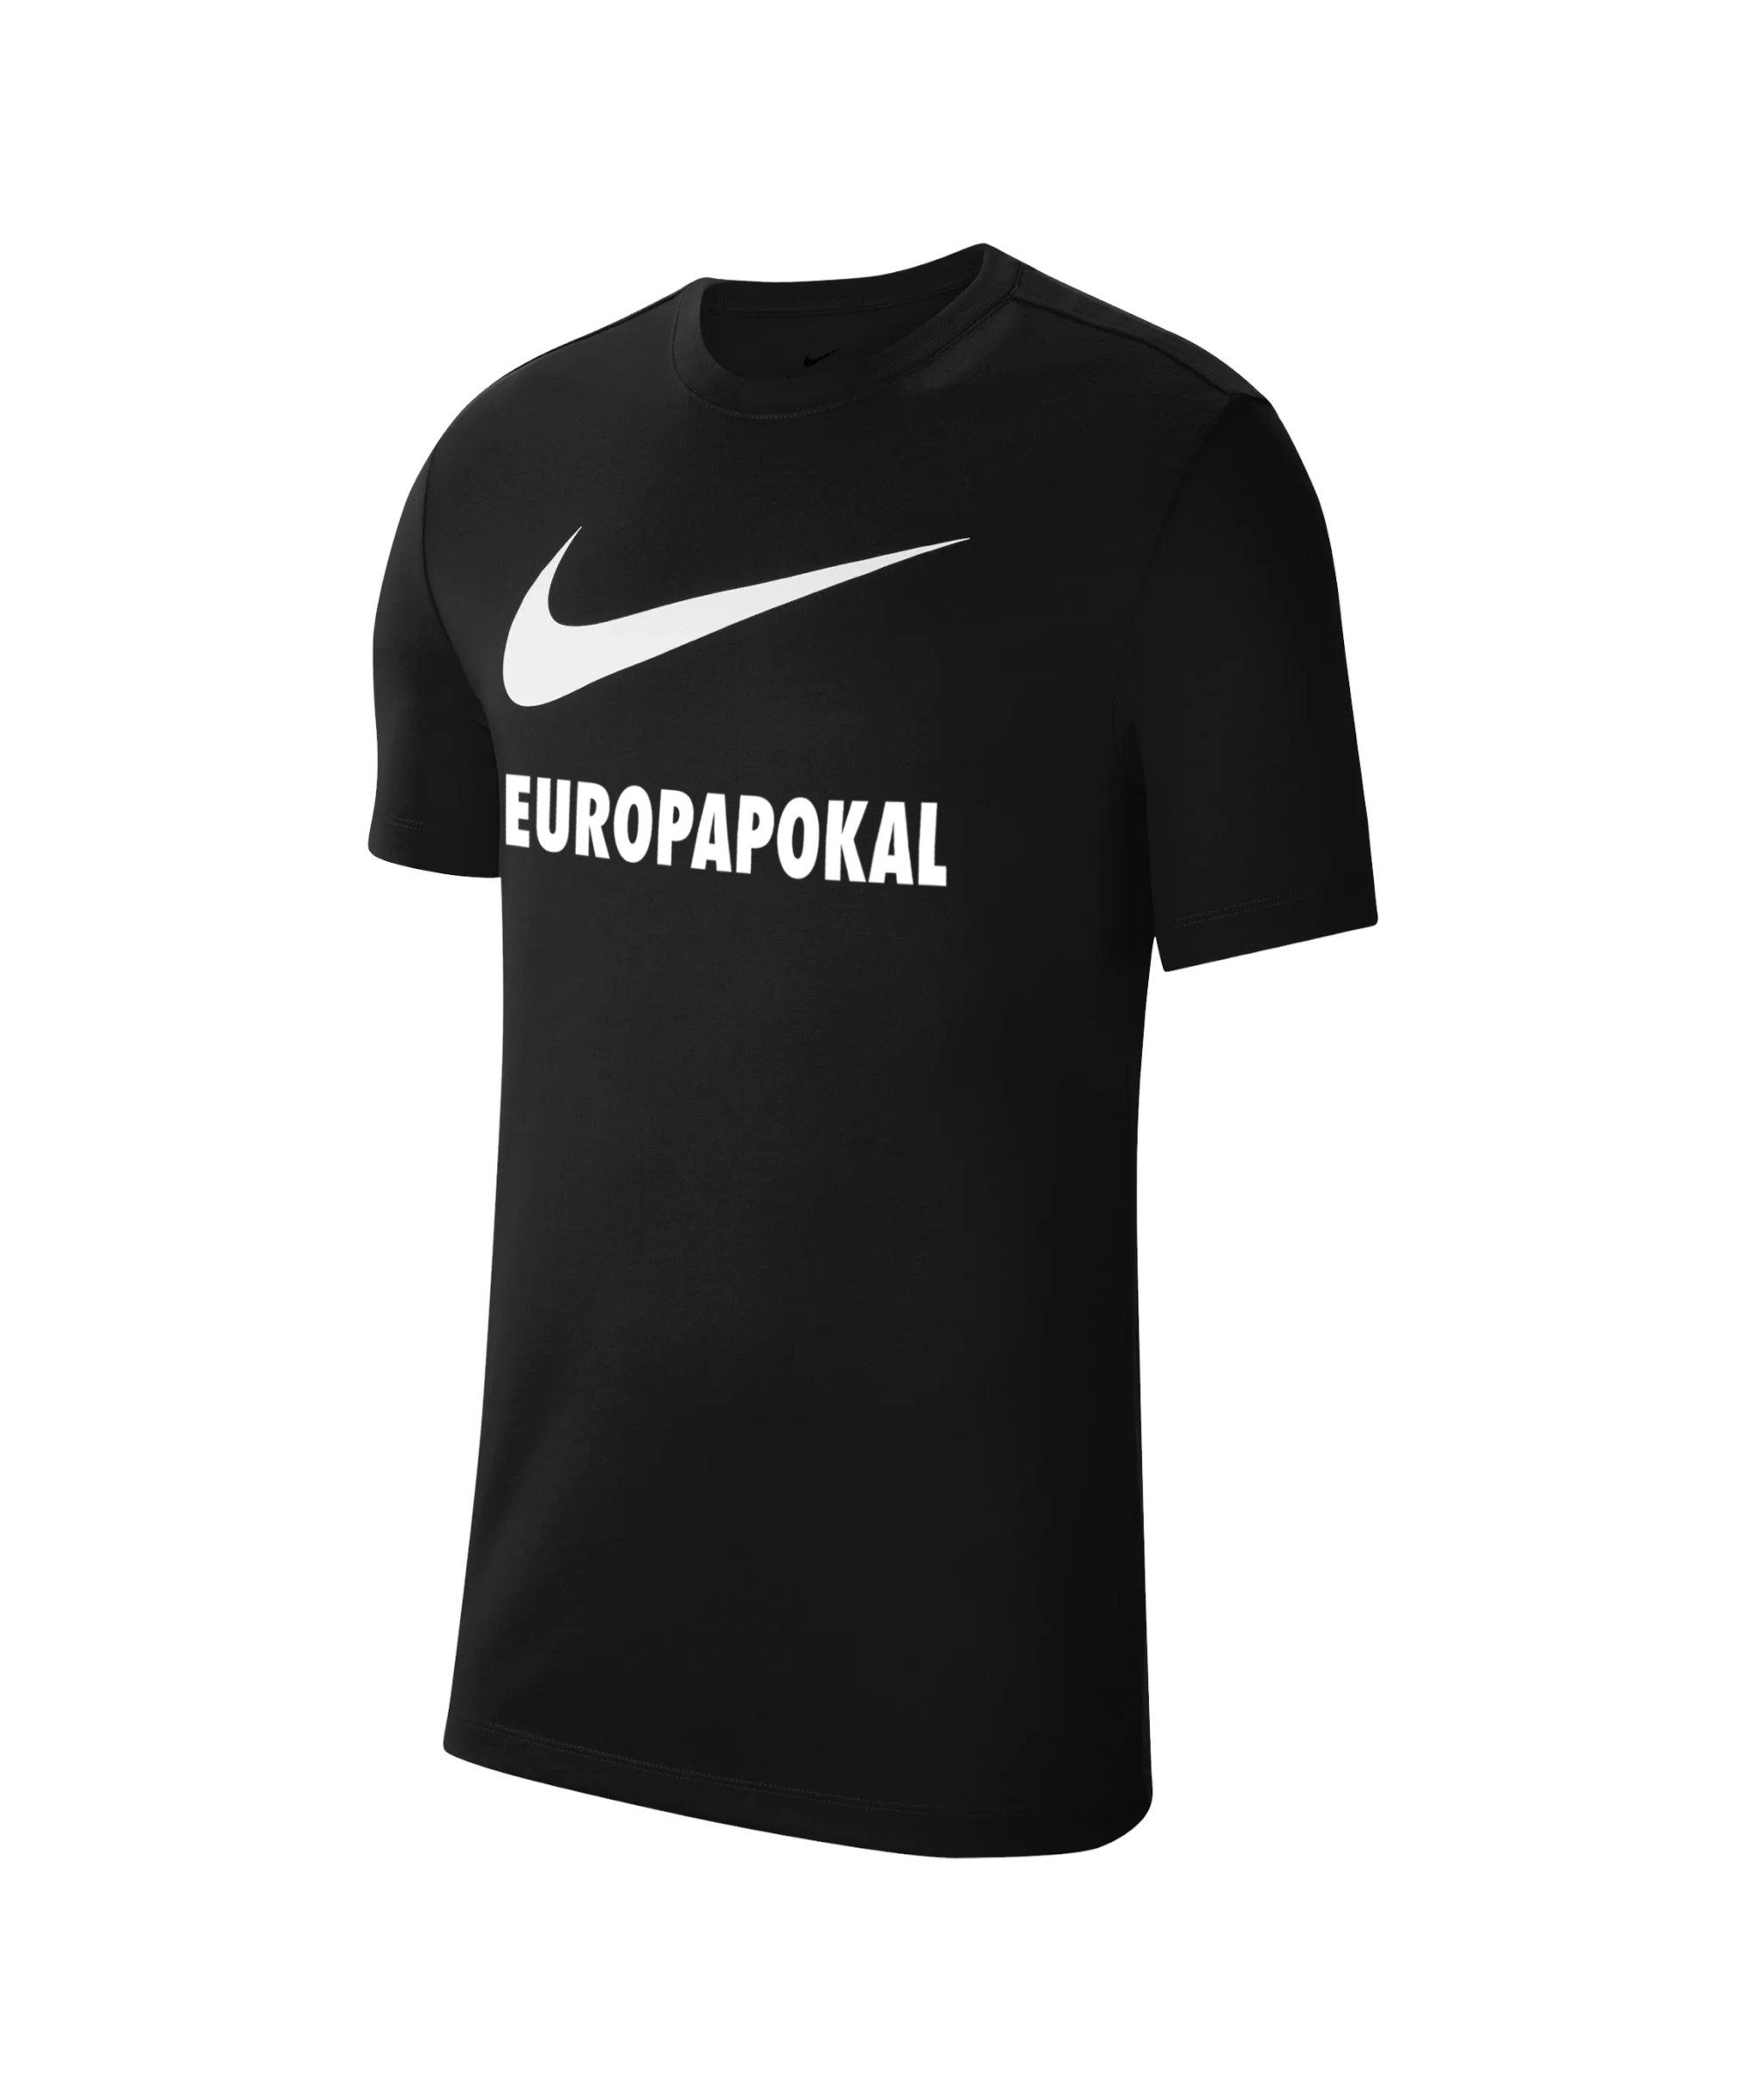 Europapokal Freiburg SC Nike T-Shirt Kids default T-Shirt